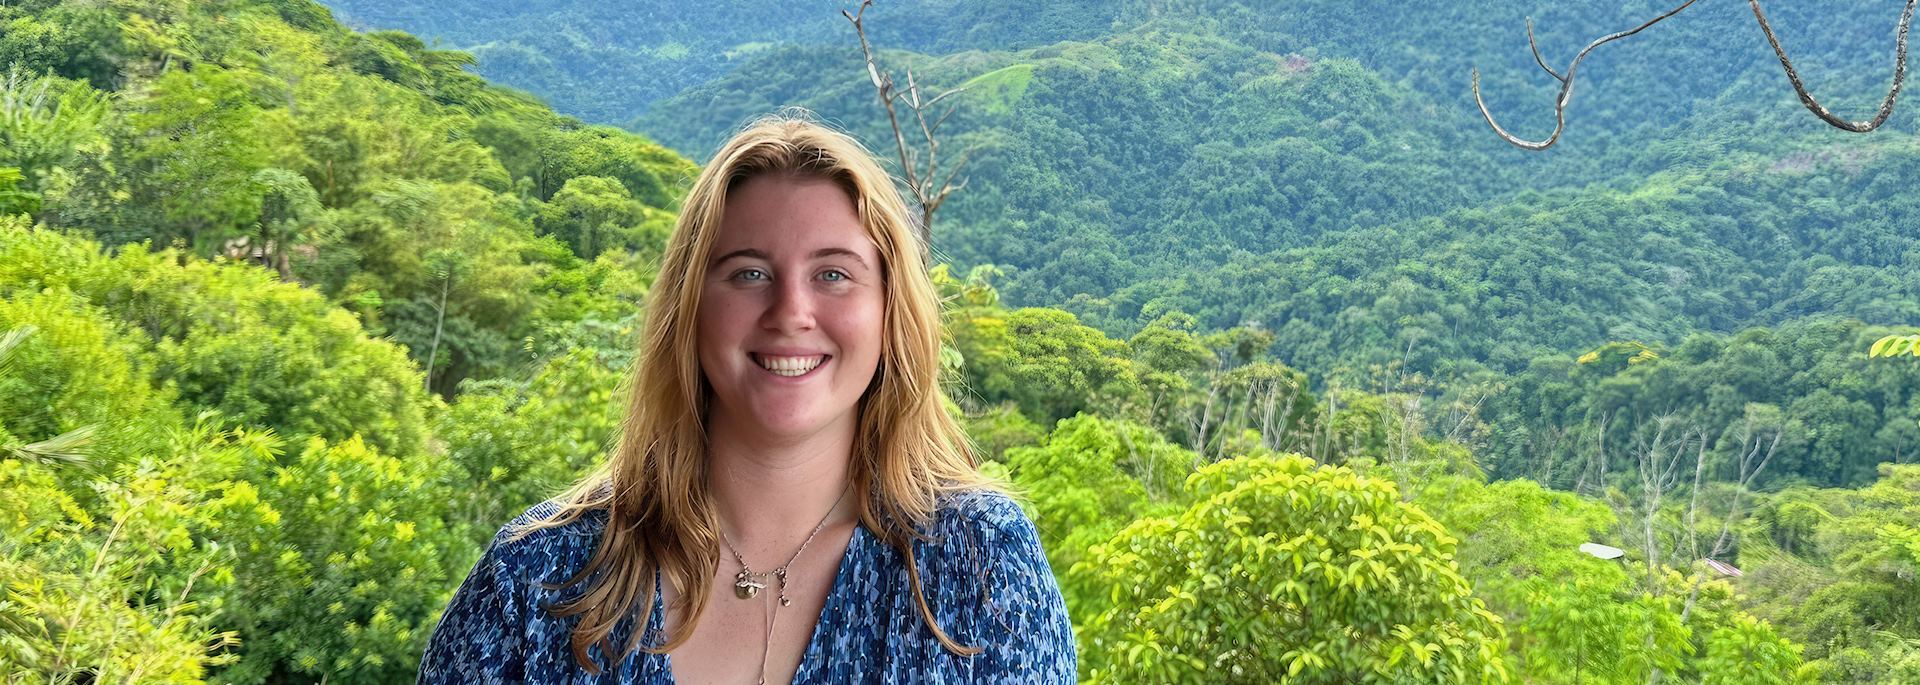 Alice visiting Costa Rica